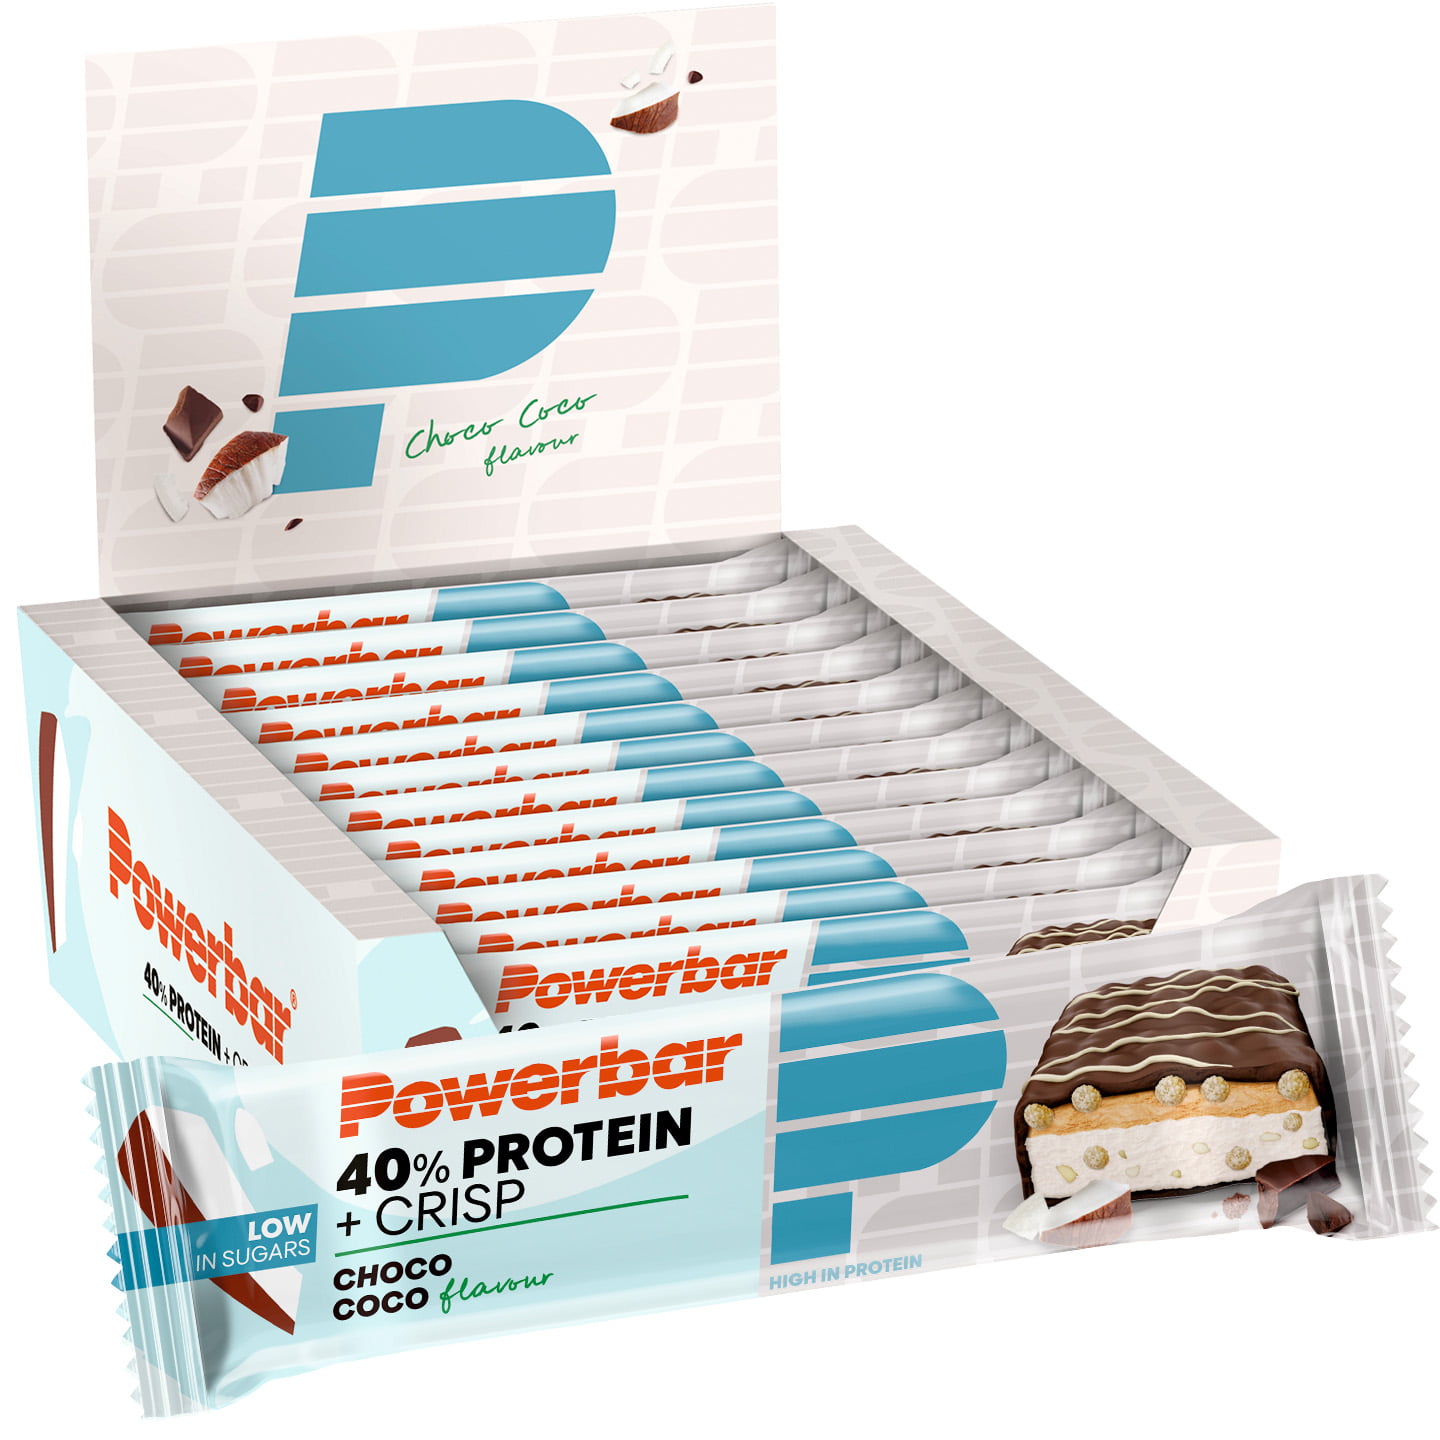 POWERBAR 40% Protein+ Crisp Riegel Choco Coco 12 Stck. Bar, Sports food